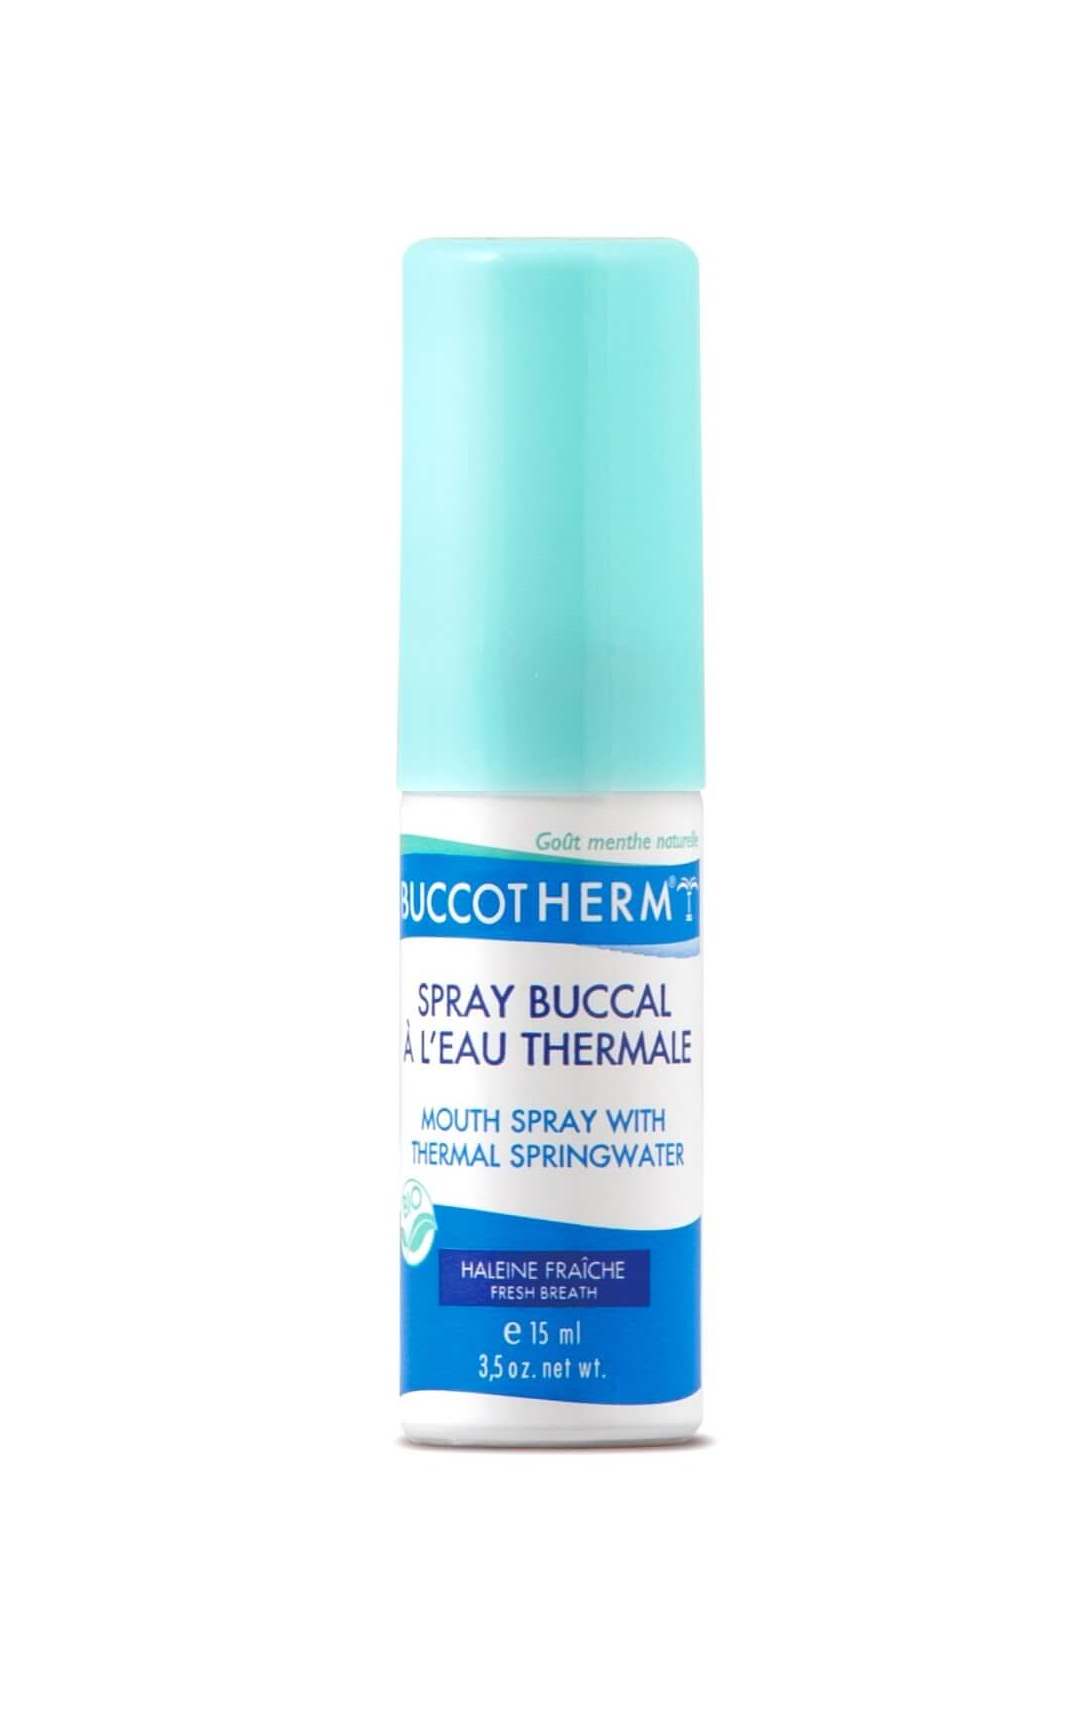 FRESH - Spray Buccal Haleine Fraîche, 15ml